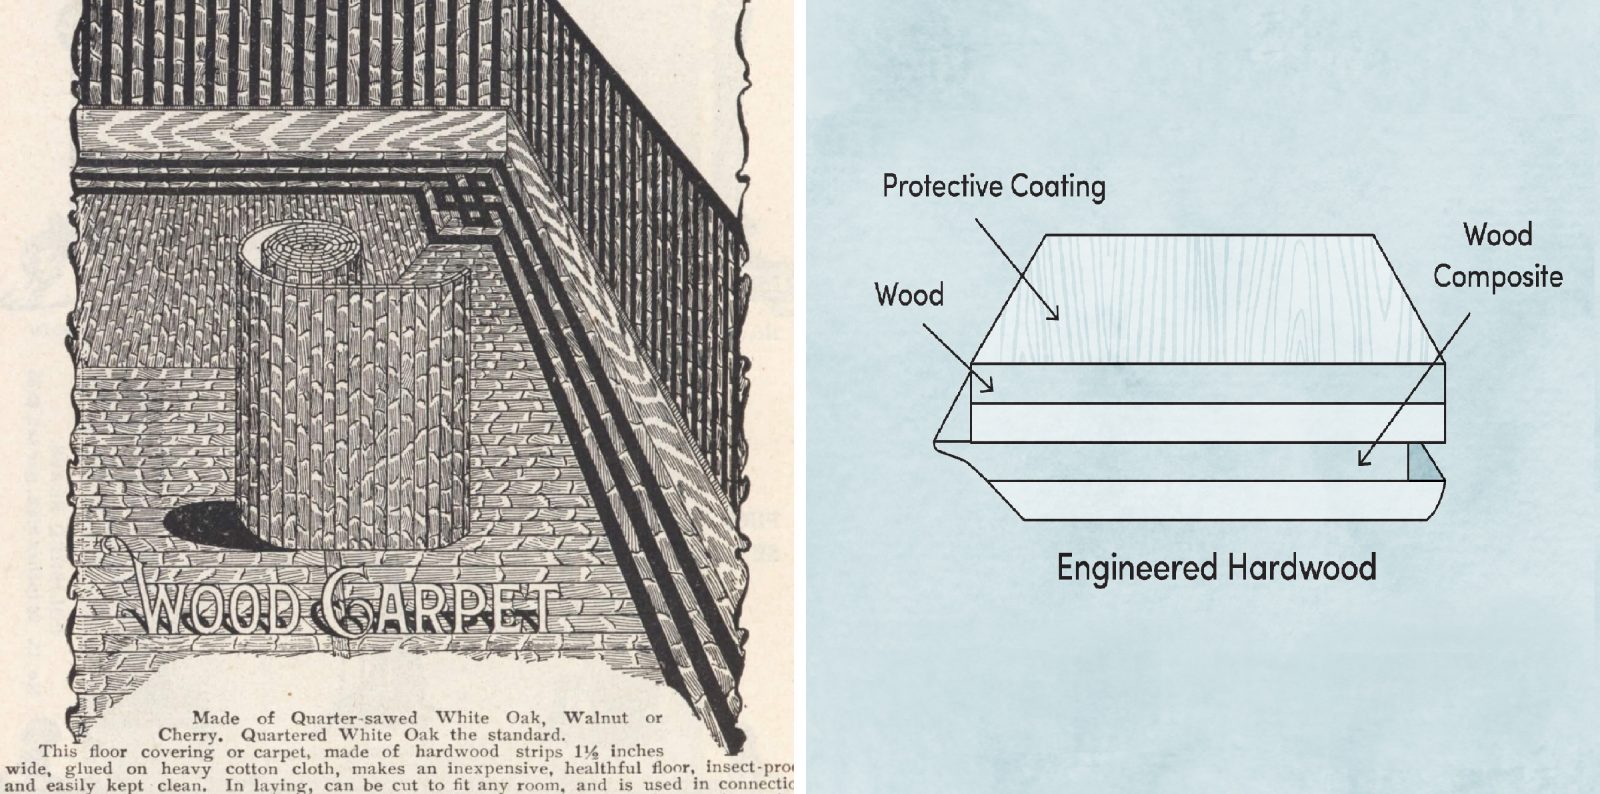 An image showing wood carpet and engineered hardwood